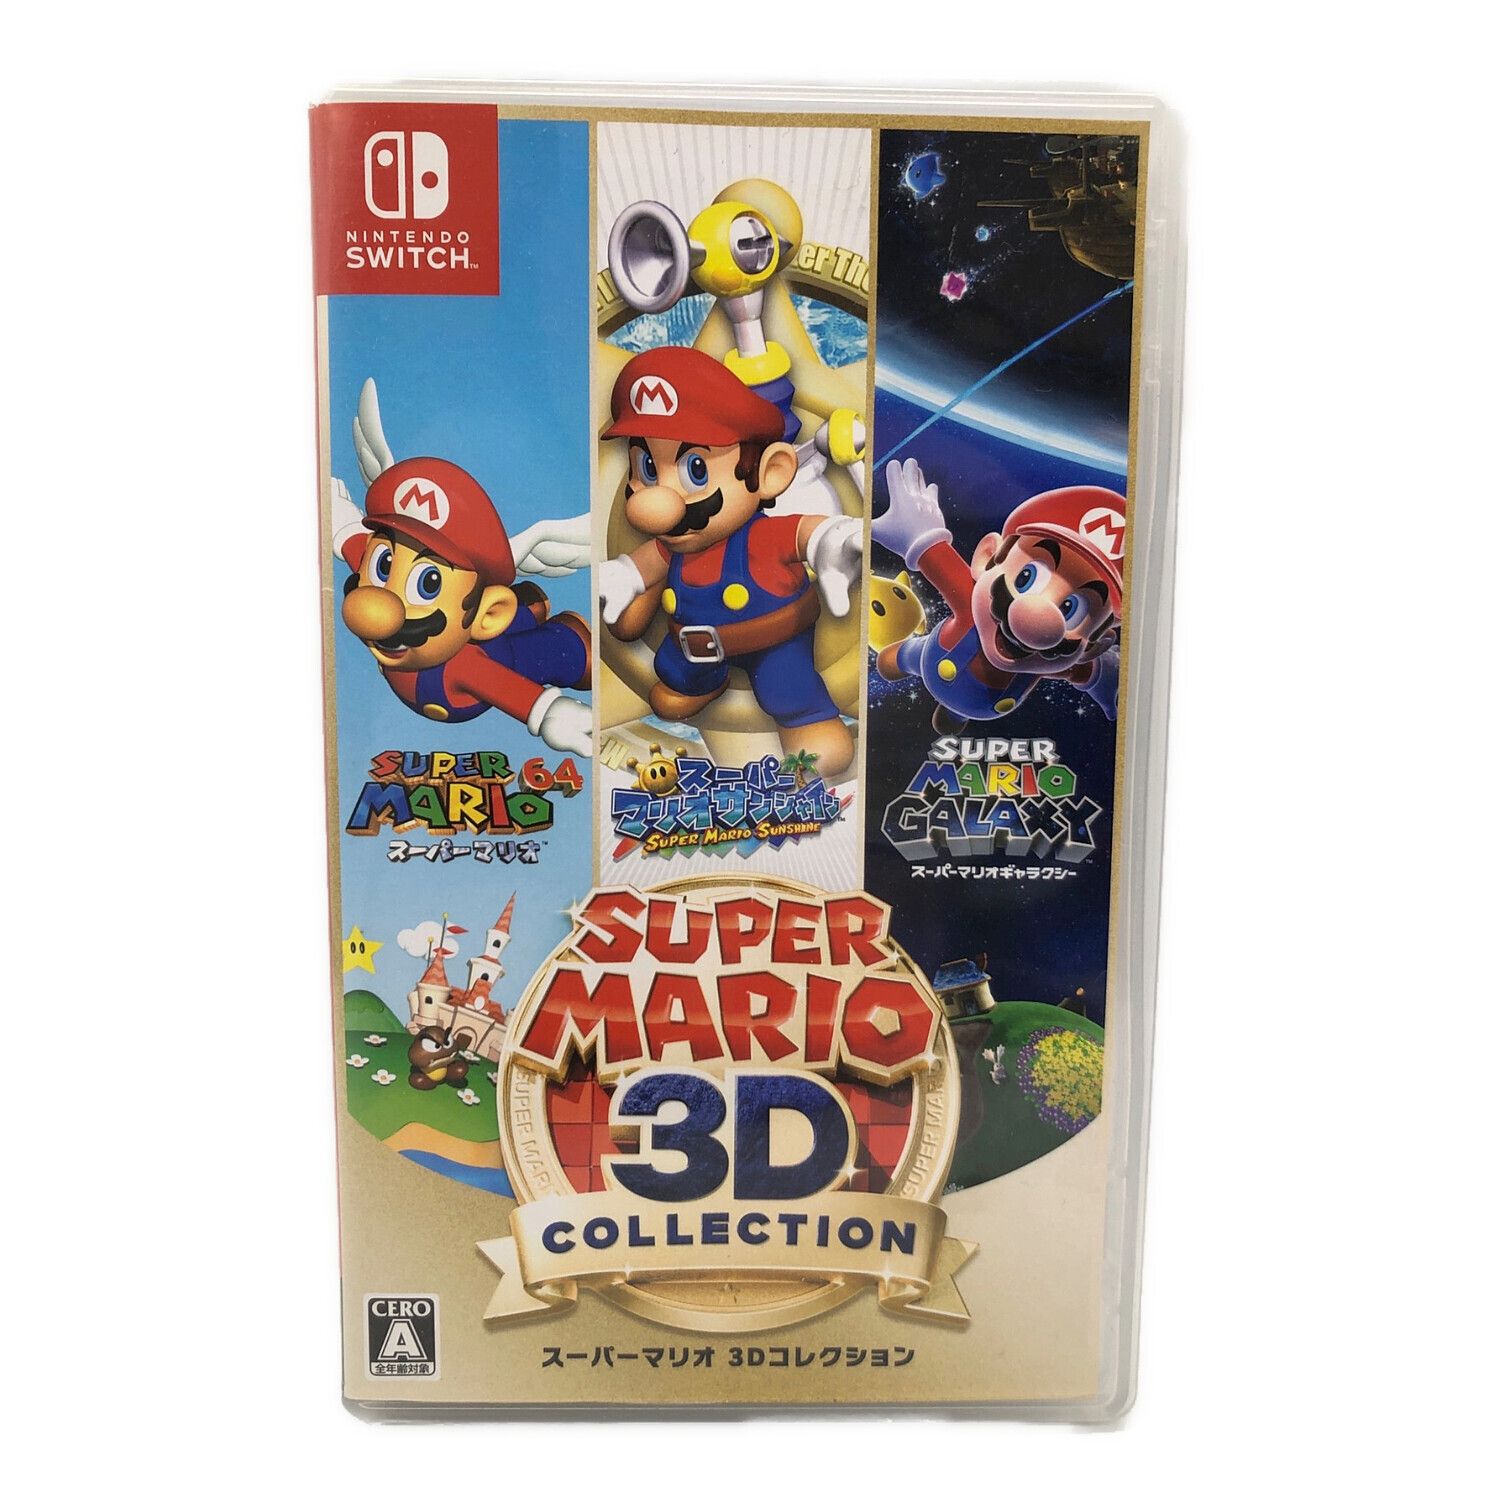 Nintendo Switch用ソフト スーパーマリオ 3Dコレクション CERO A (全年齢対象)